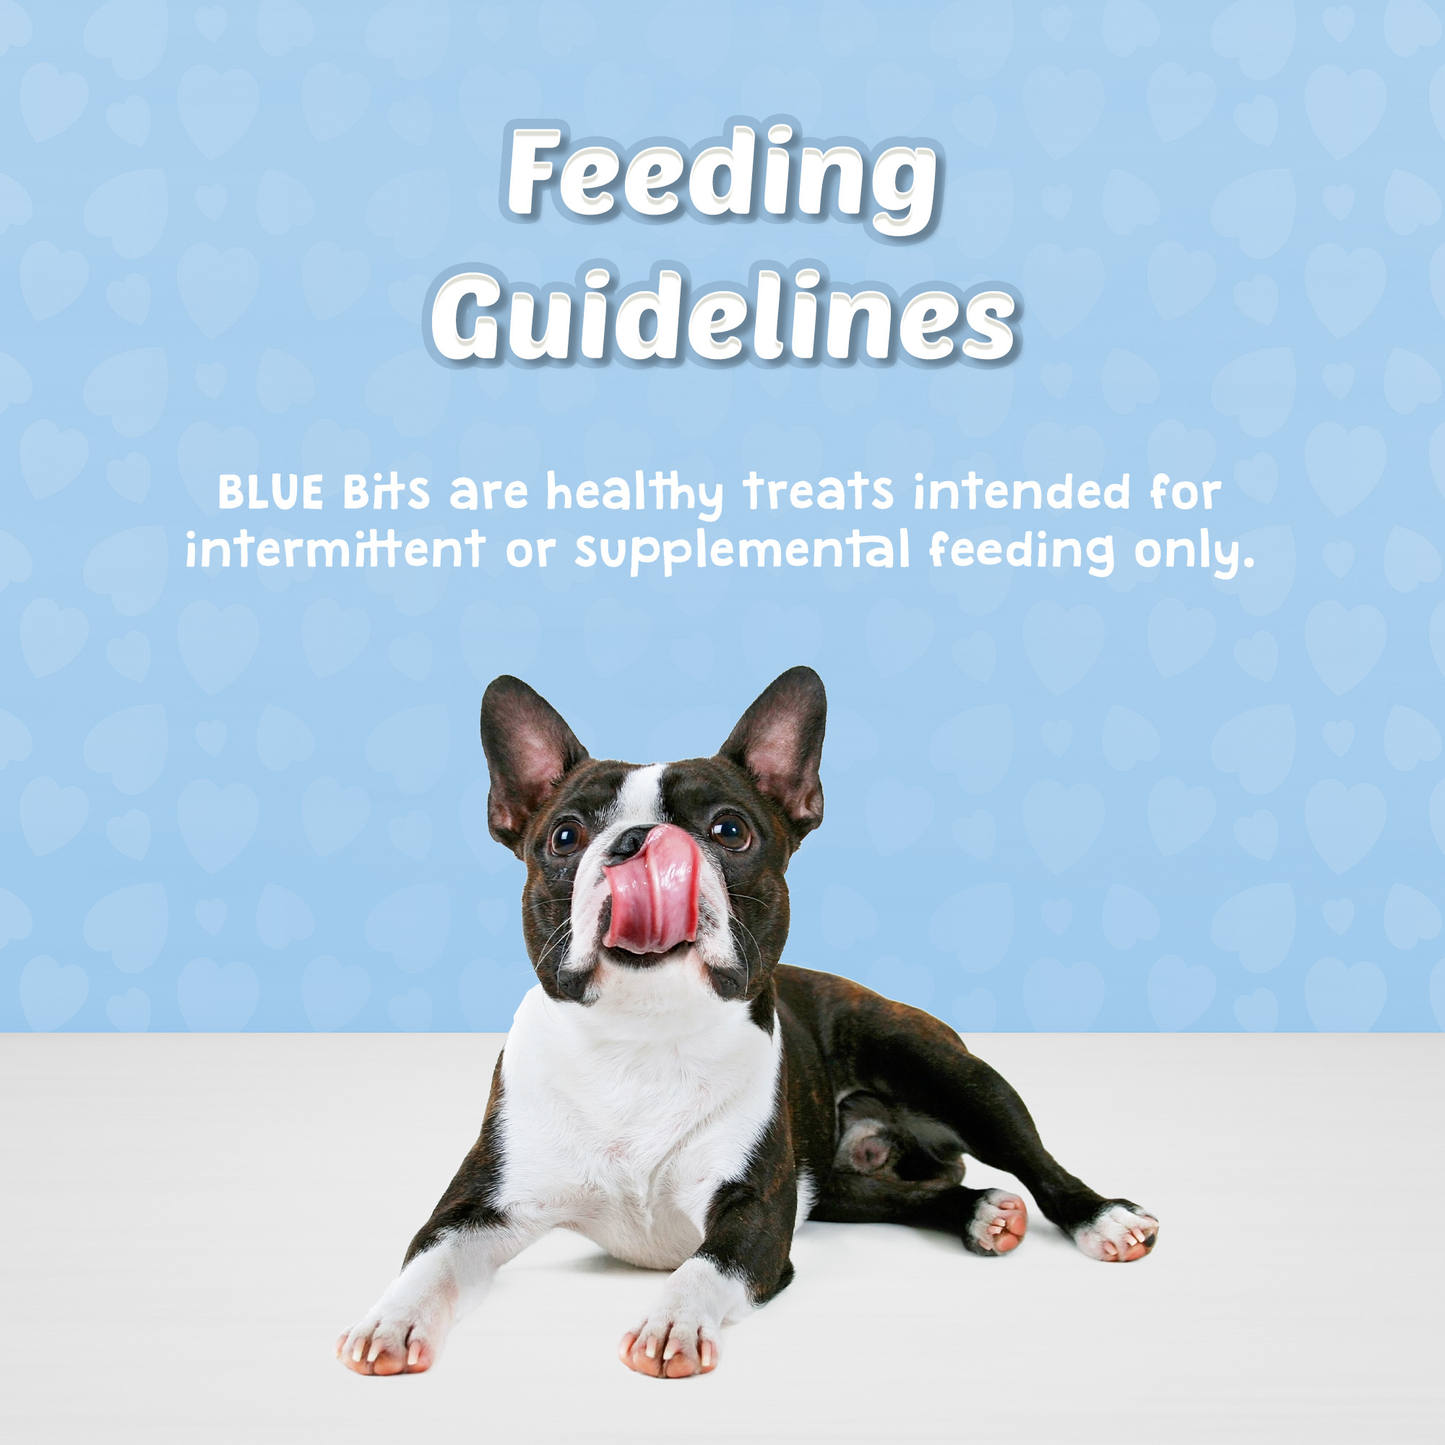 Blue Buffalo BLUE Bits Natural Soft-Moist Training Dog Treats, Beef, 4oz Bag